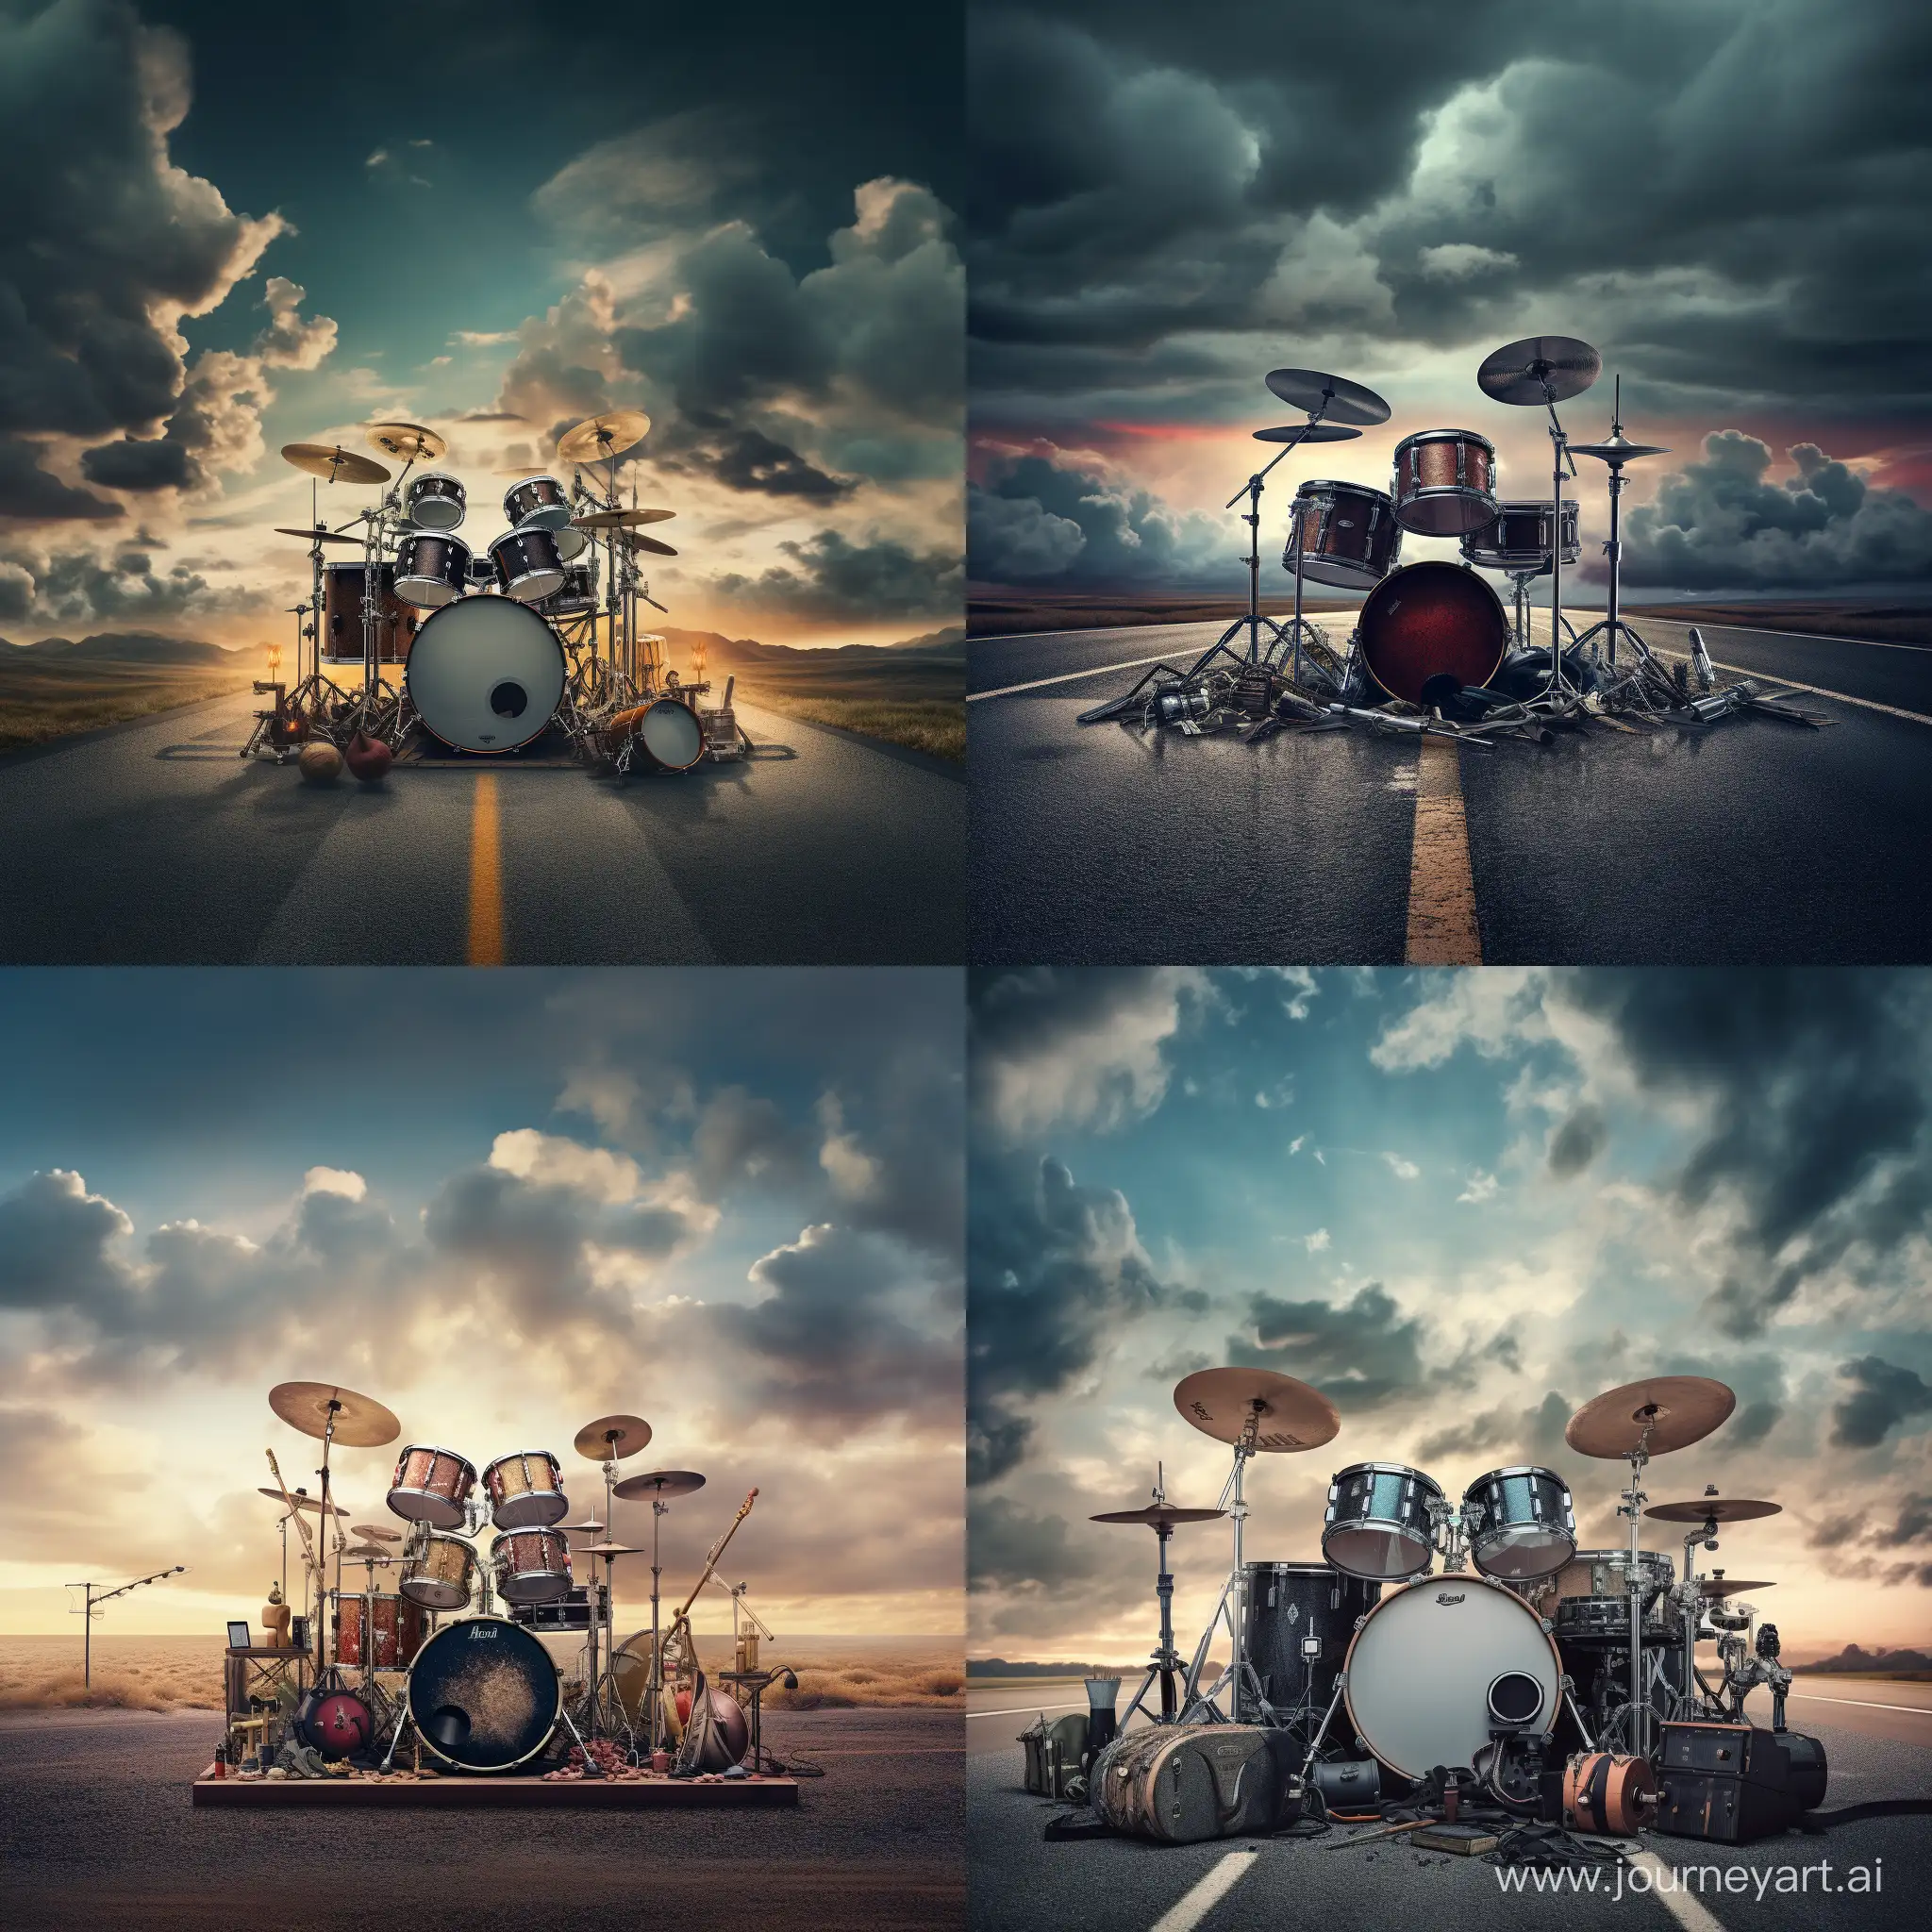 TruckMounted-Drum-Kit-under-Stormy-Skies